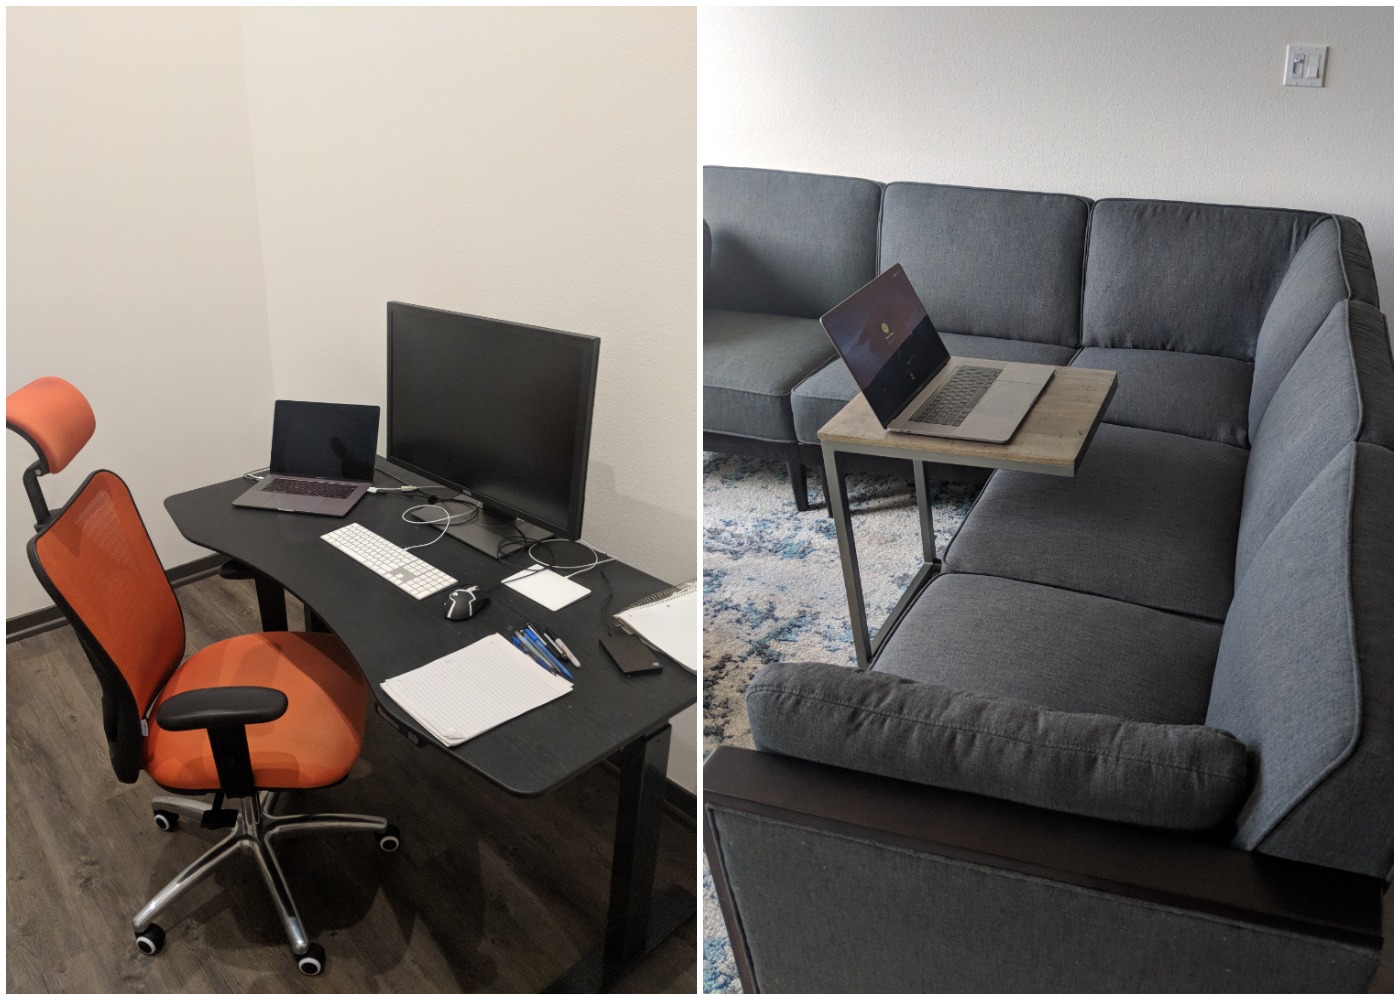 Home office setup of Rijnard van Tonder, Software Engineer